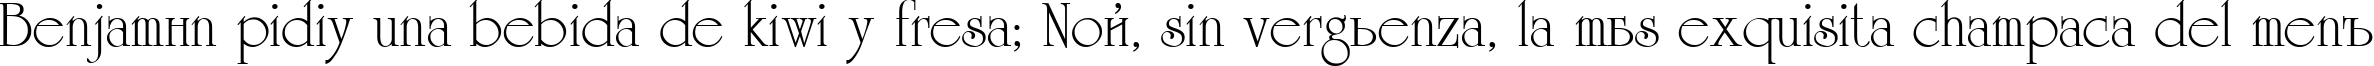 Пример написания шрифтом Unicorn Rus текста на испанском